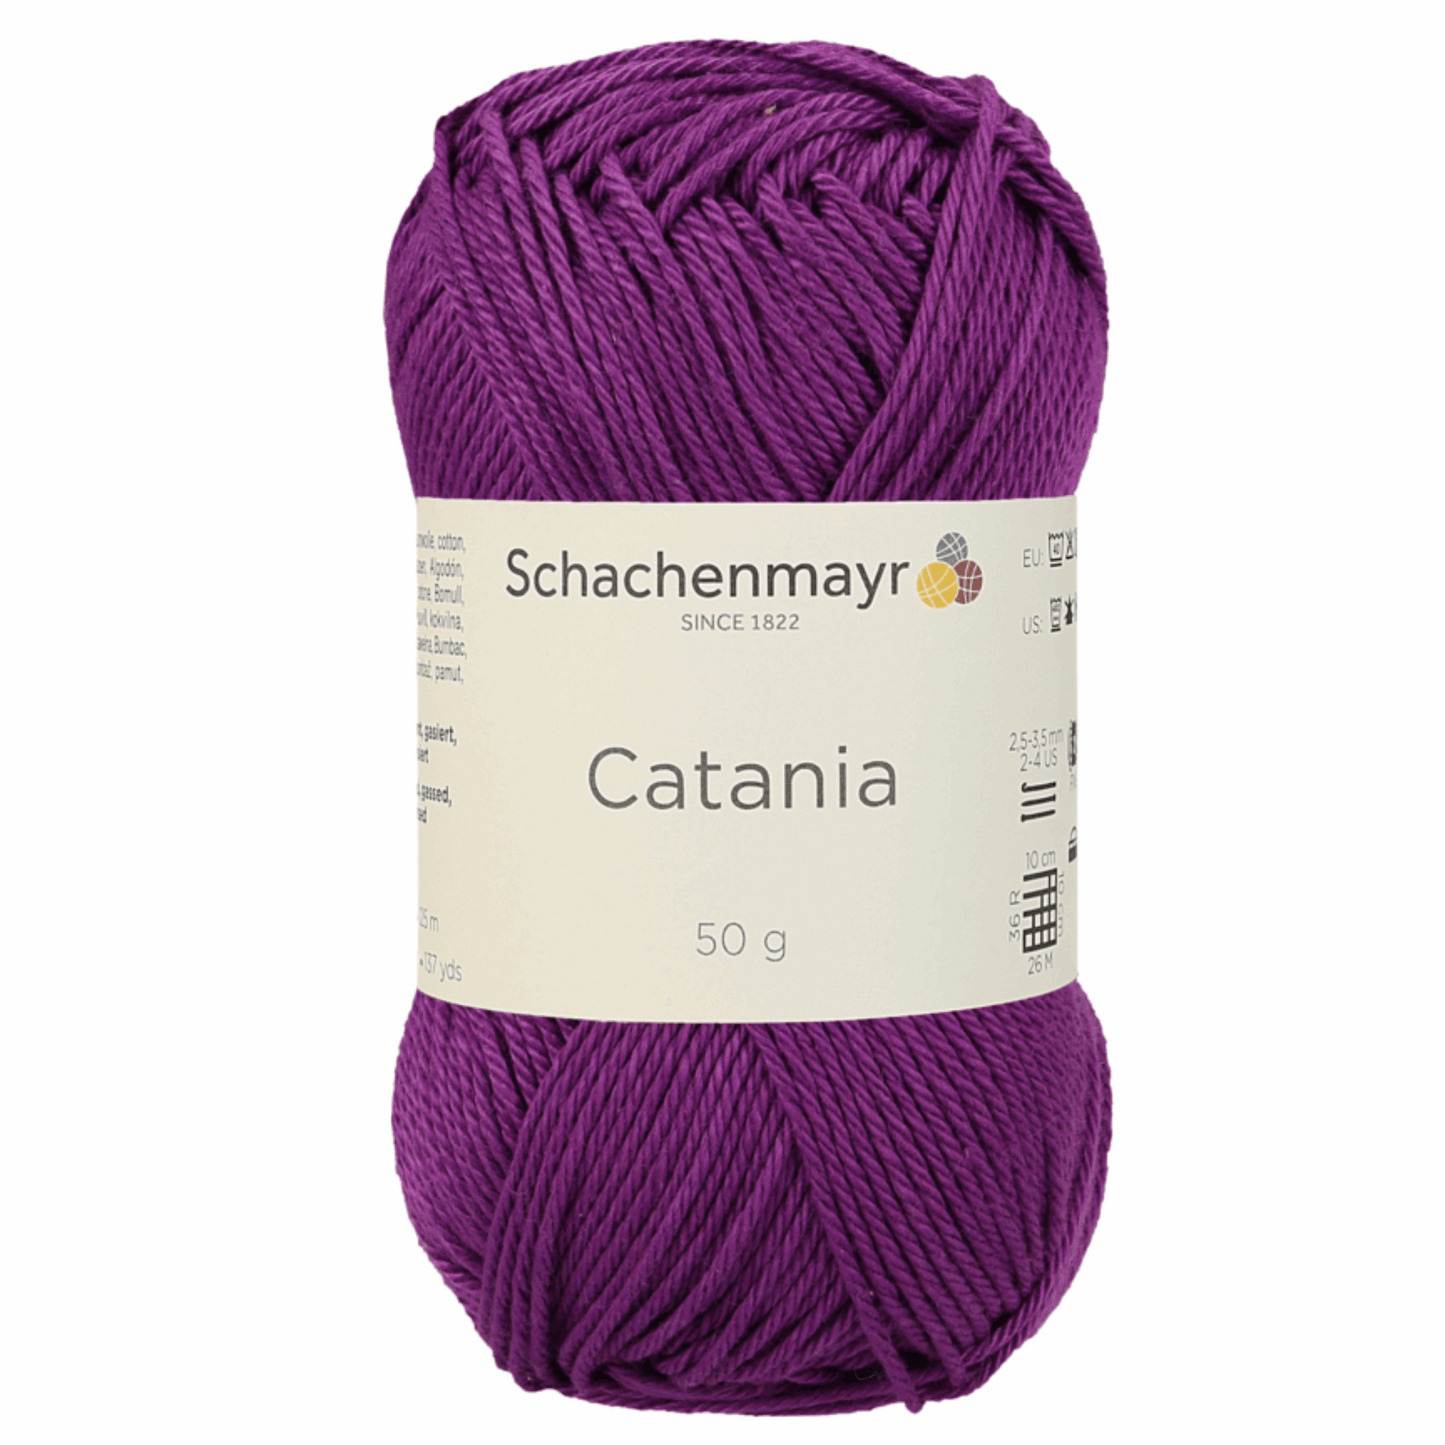 Catania 50g, 90344, Farbe 282, phlox